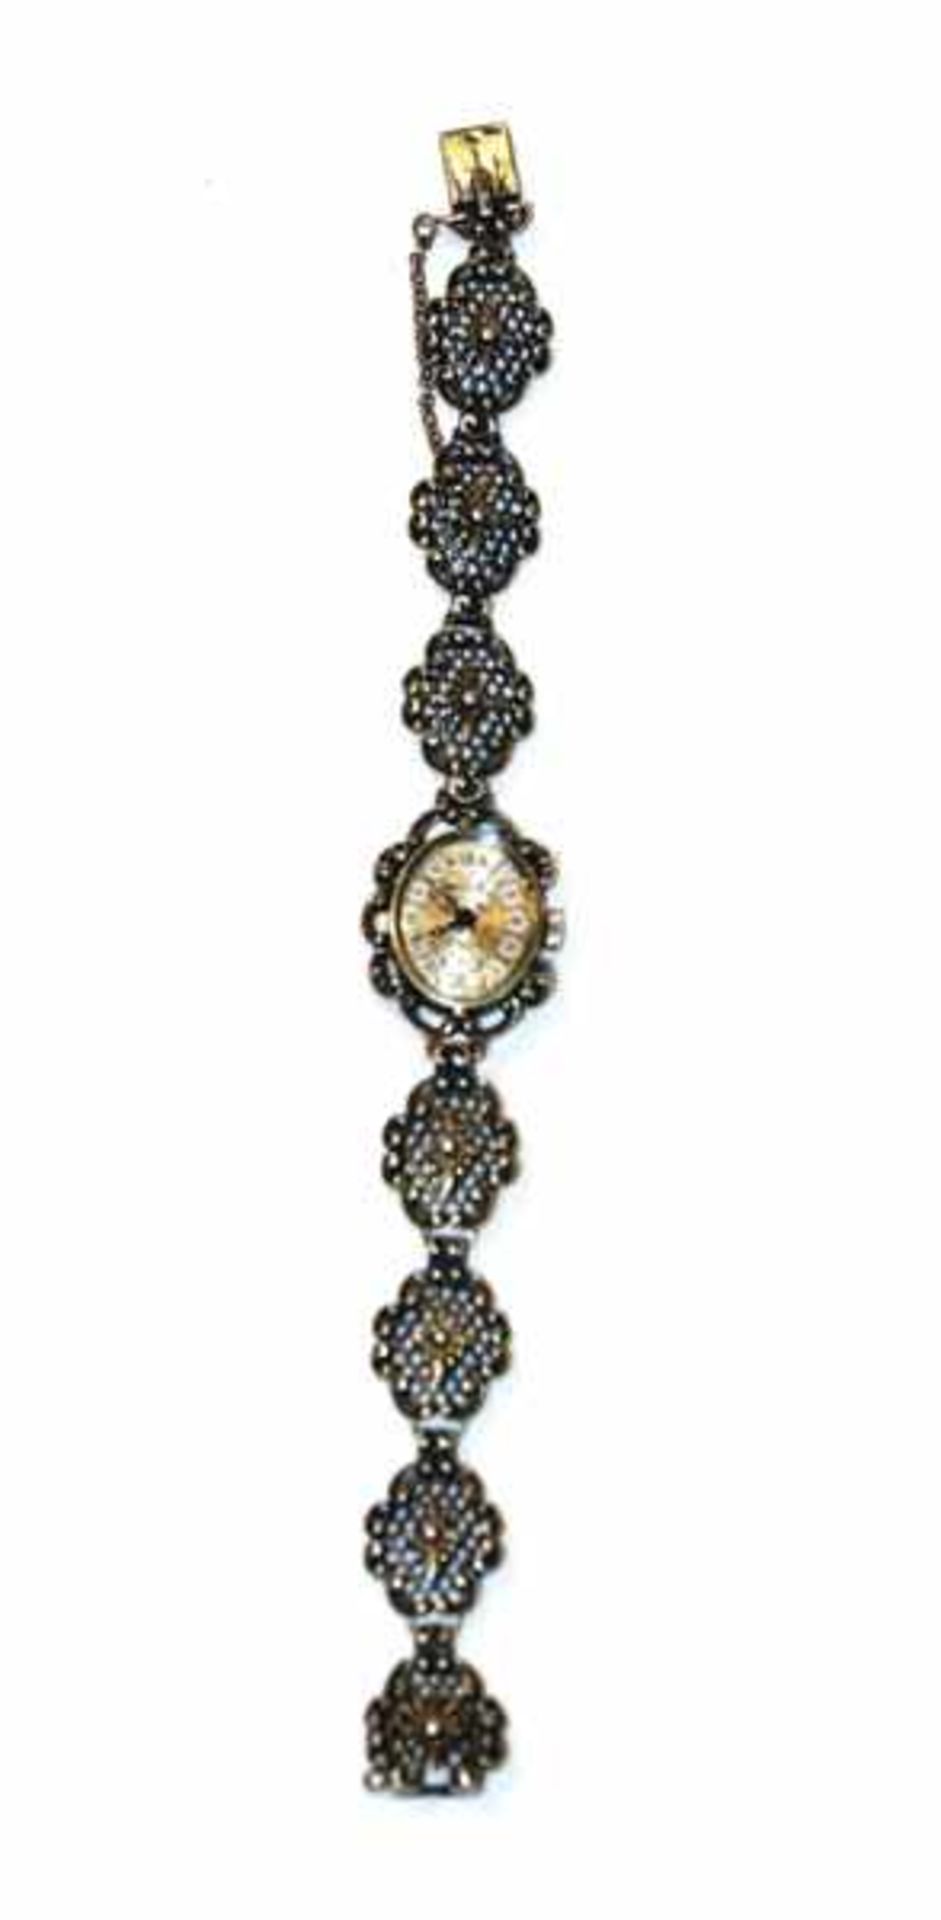 Silber Damen Trachten-Armbanduhr, L 18 cm, Funktion nicht geprüft